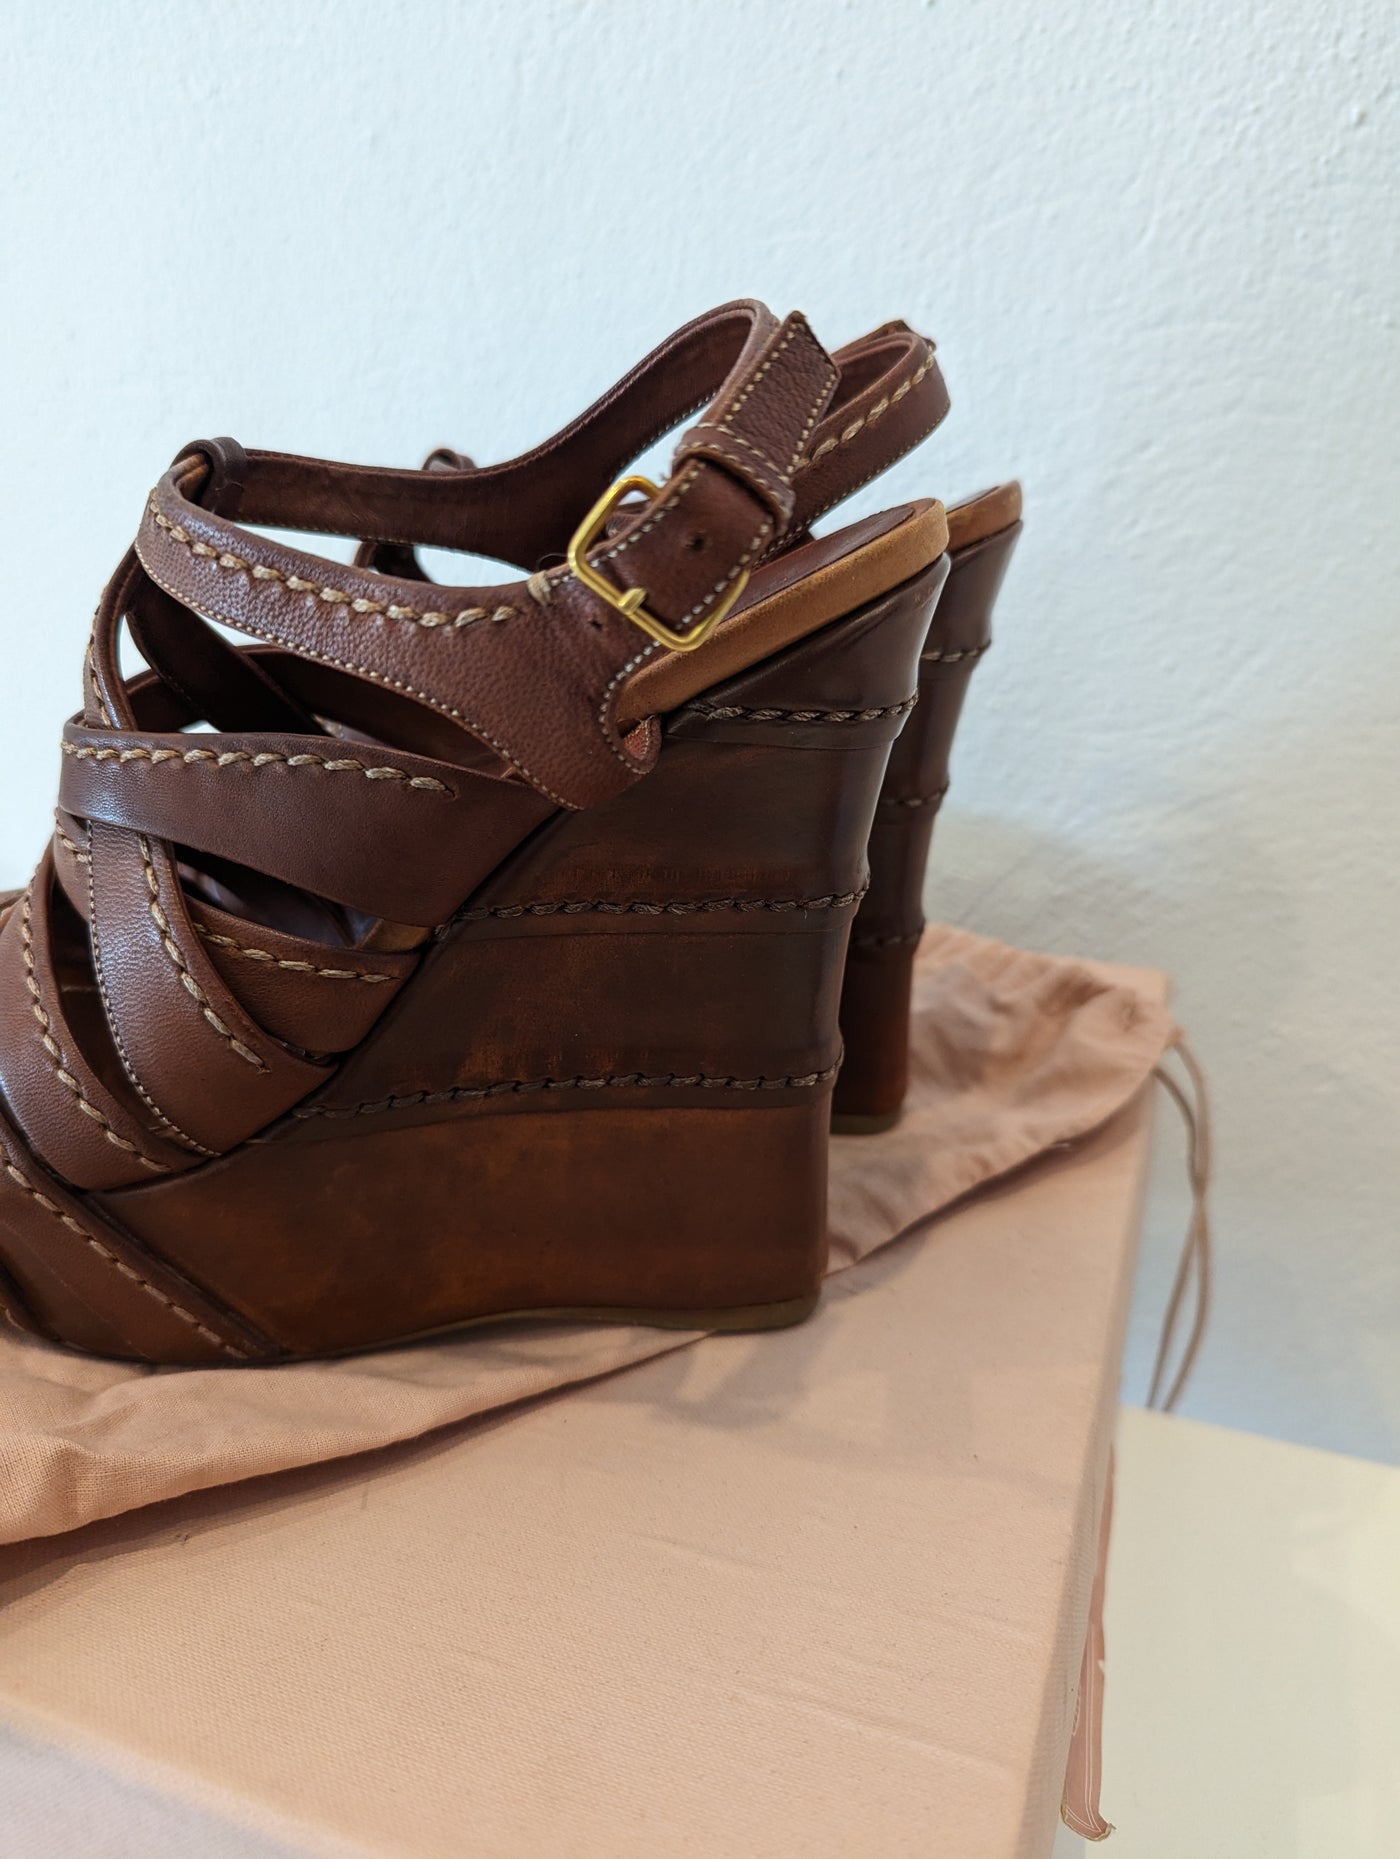 Miu Miu Brown Leather Wedges Size 38.5